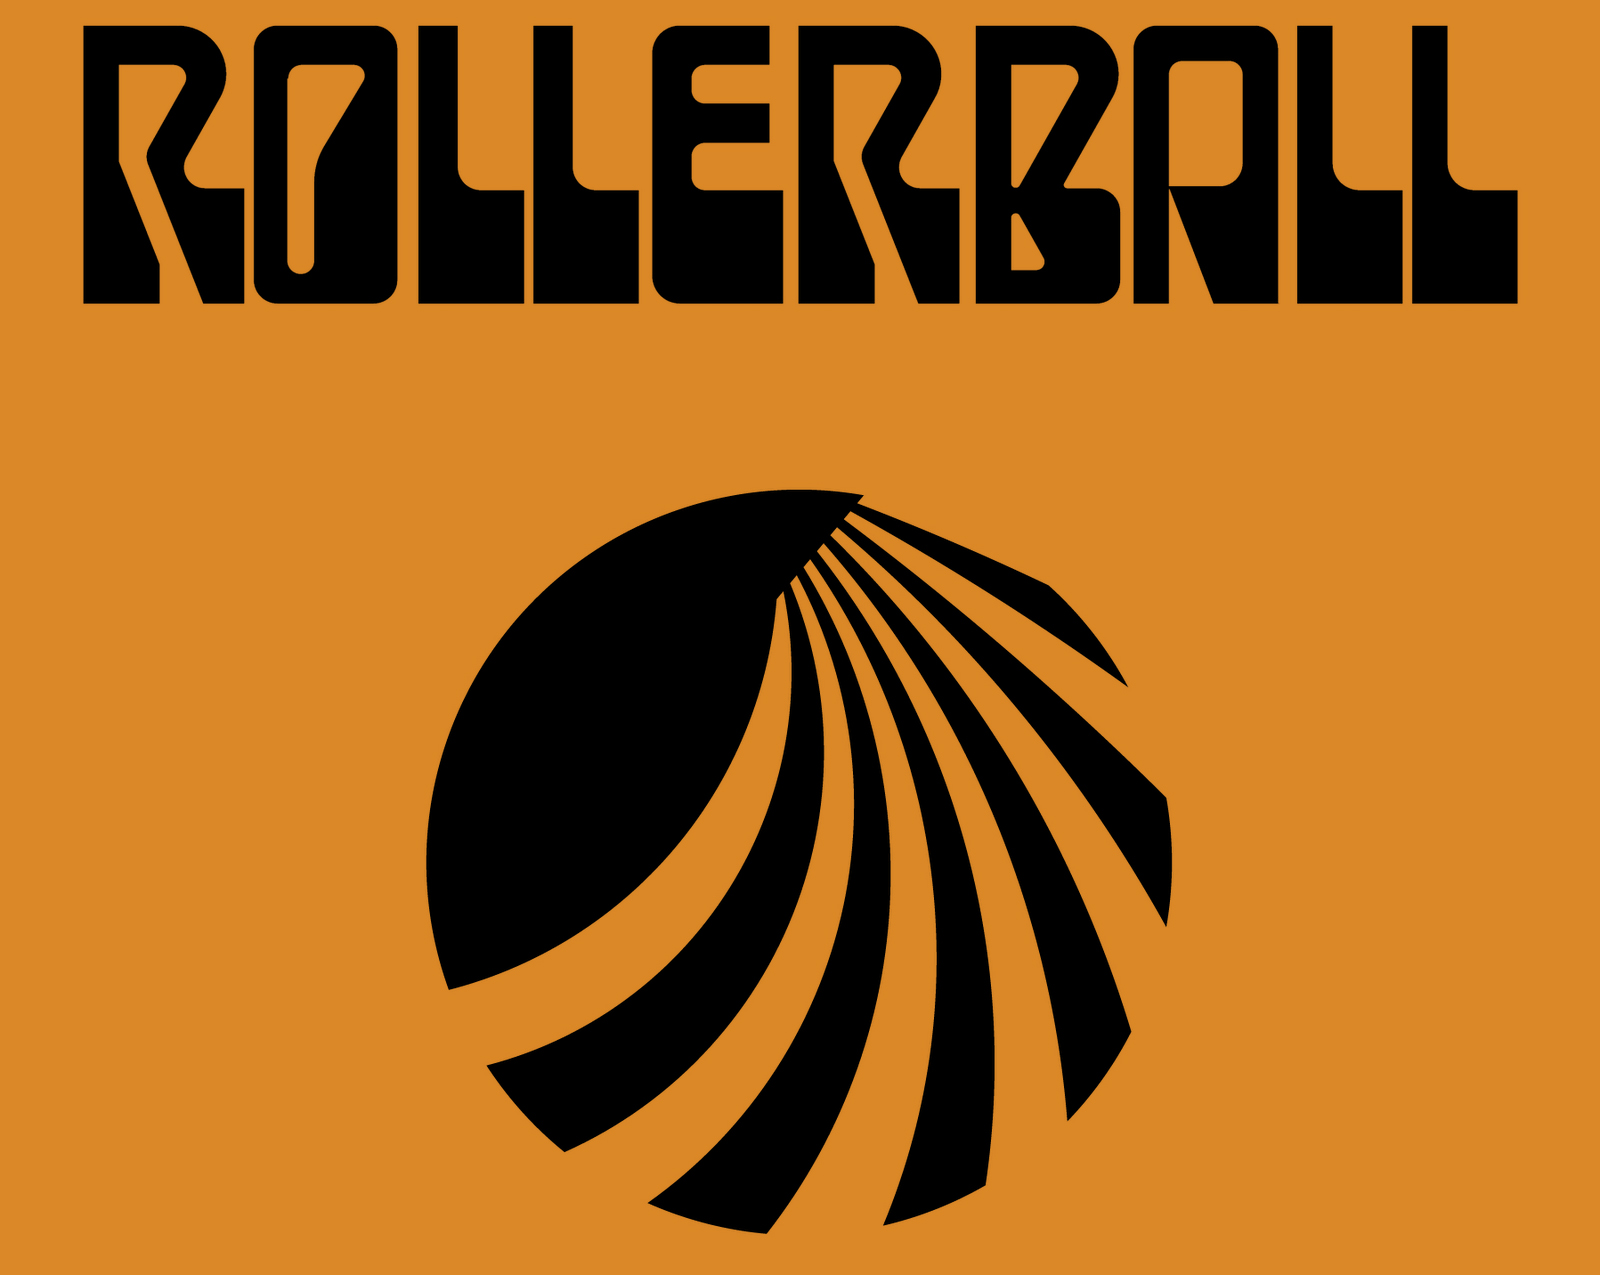 Rollerball #2